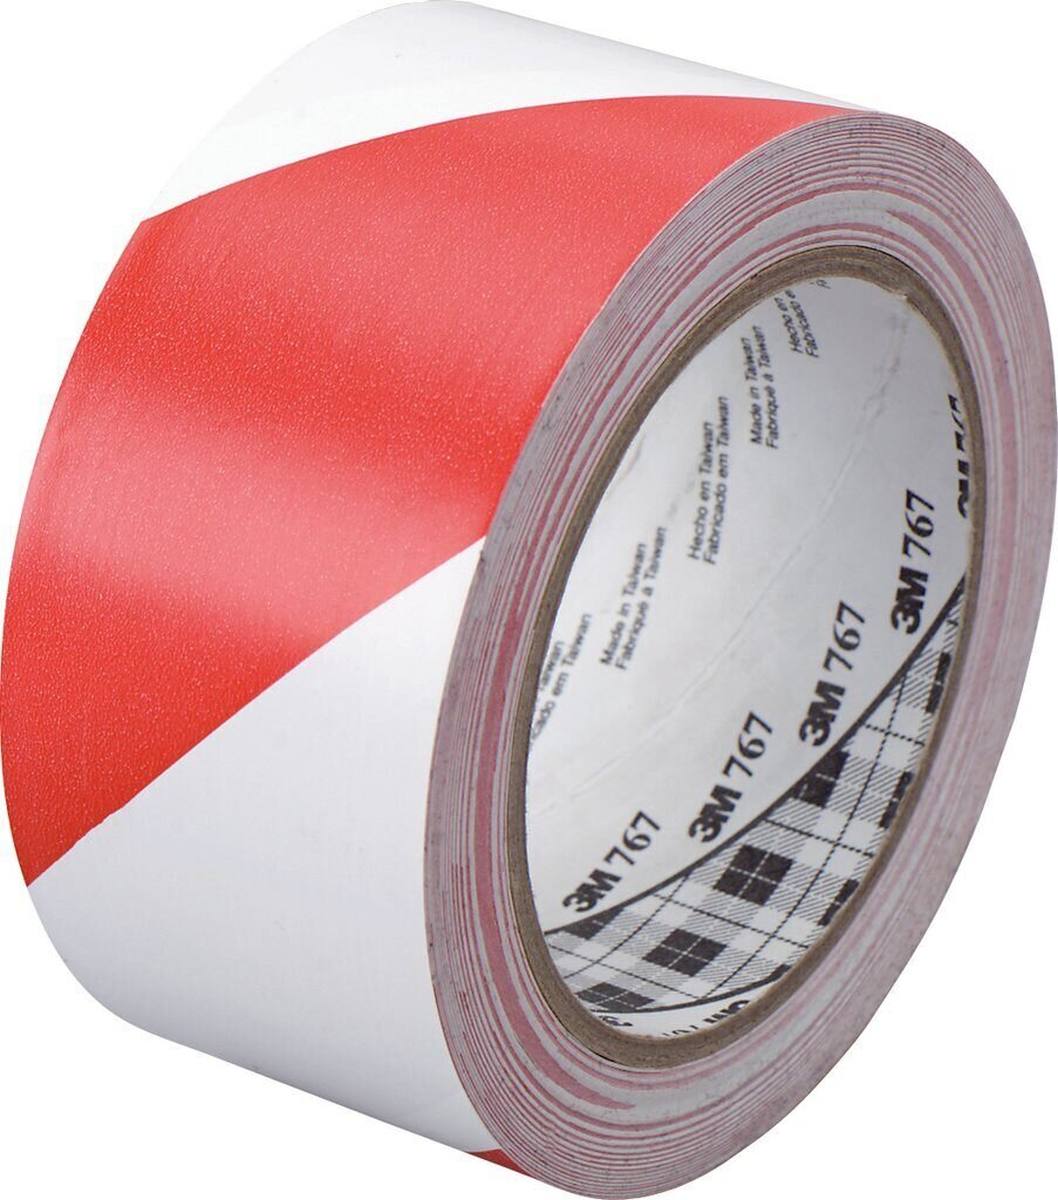 3M Scotch Ruban PVC souple tout usage 767i 50mmx33m rouge/blanc